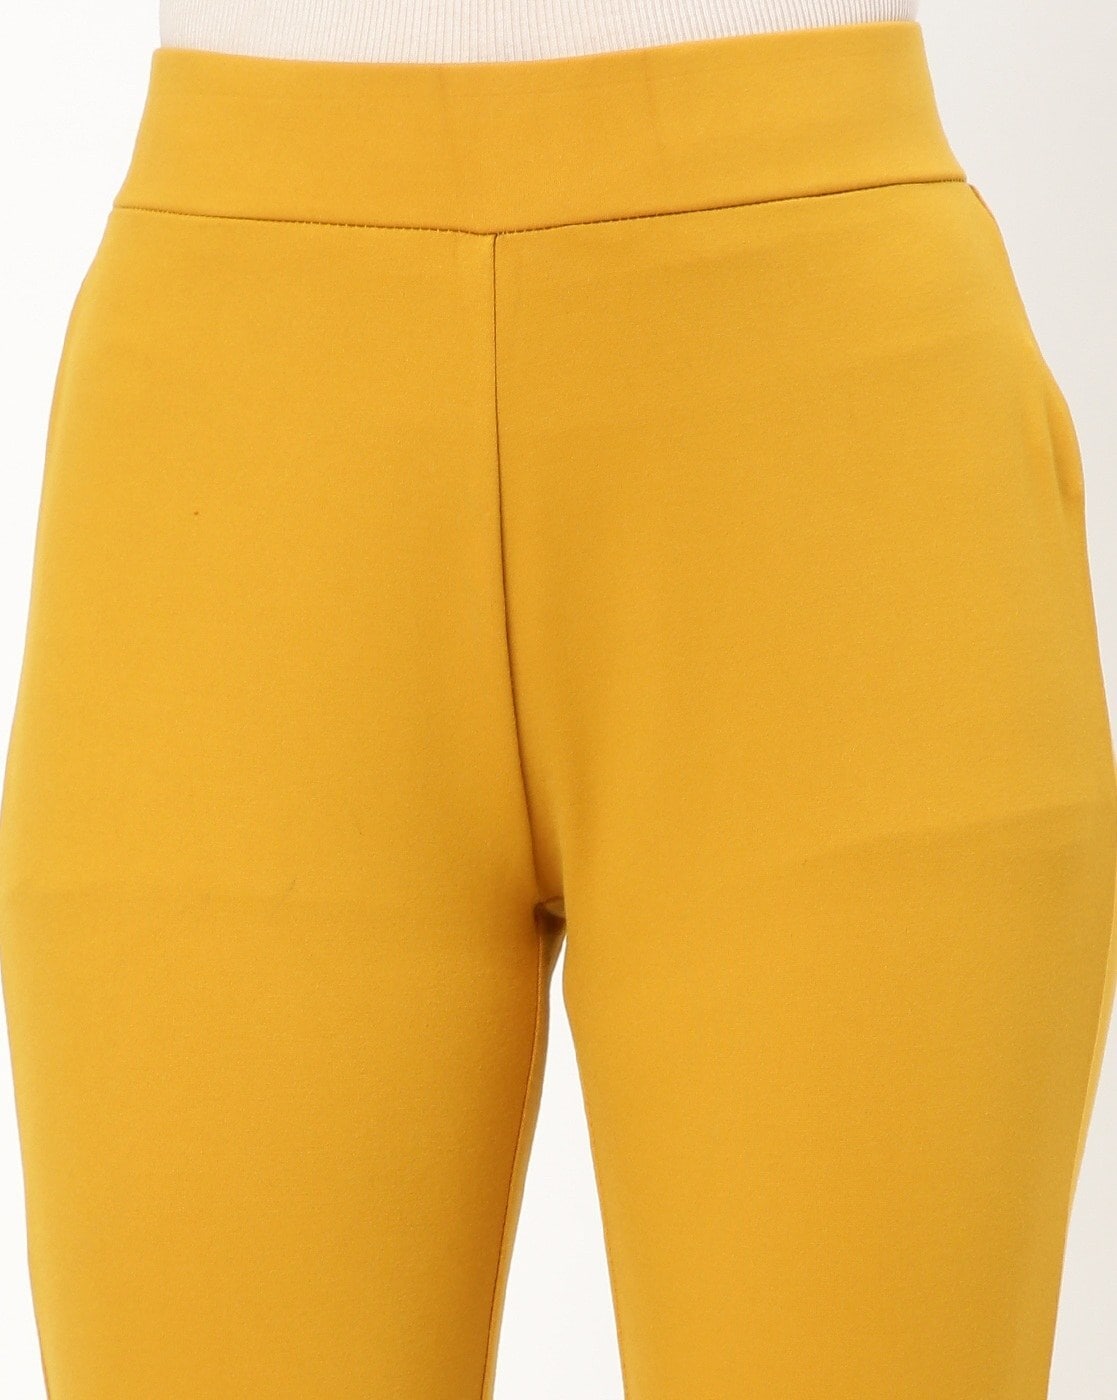 Buy Mustard Yellow Leggings for Women by SRISHTI Online